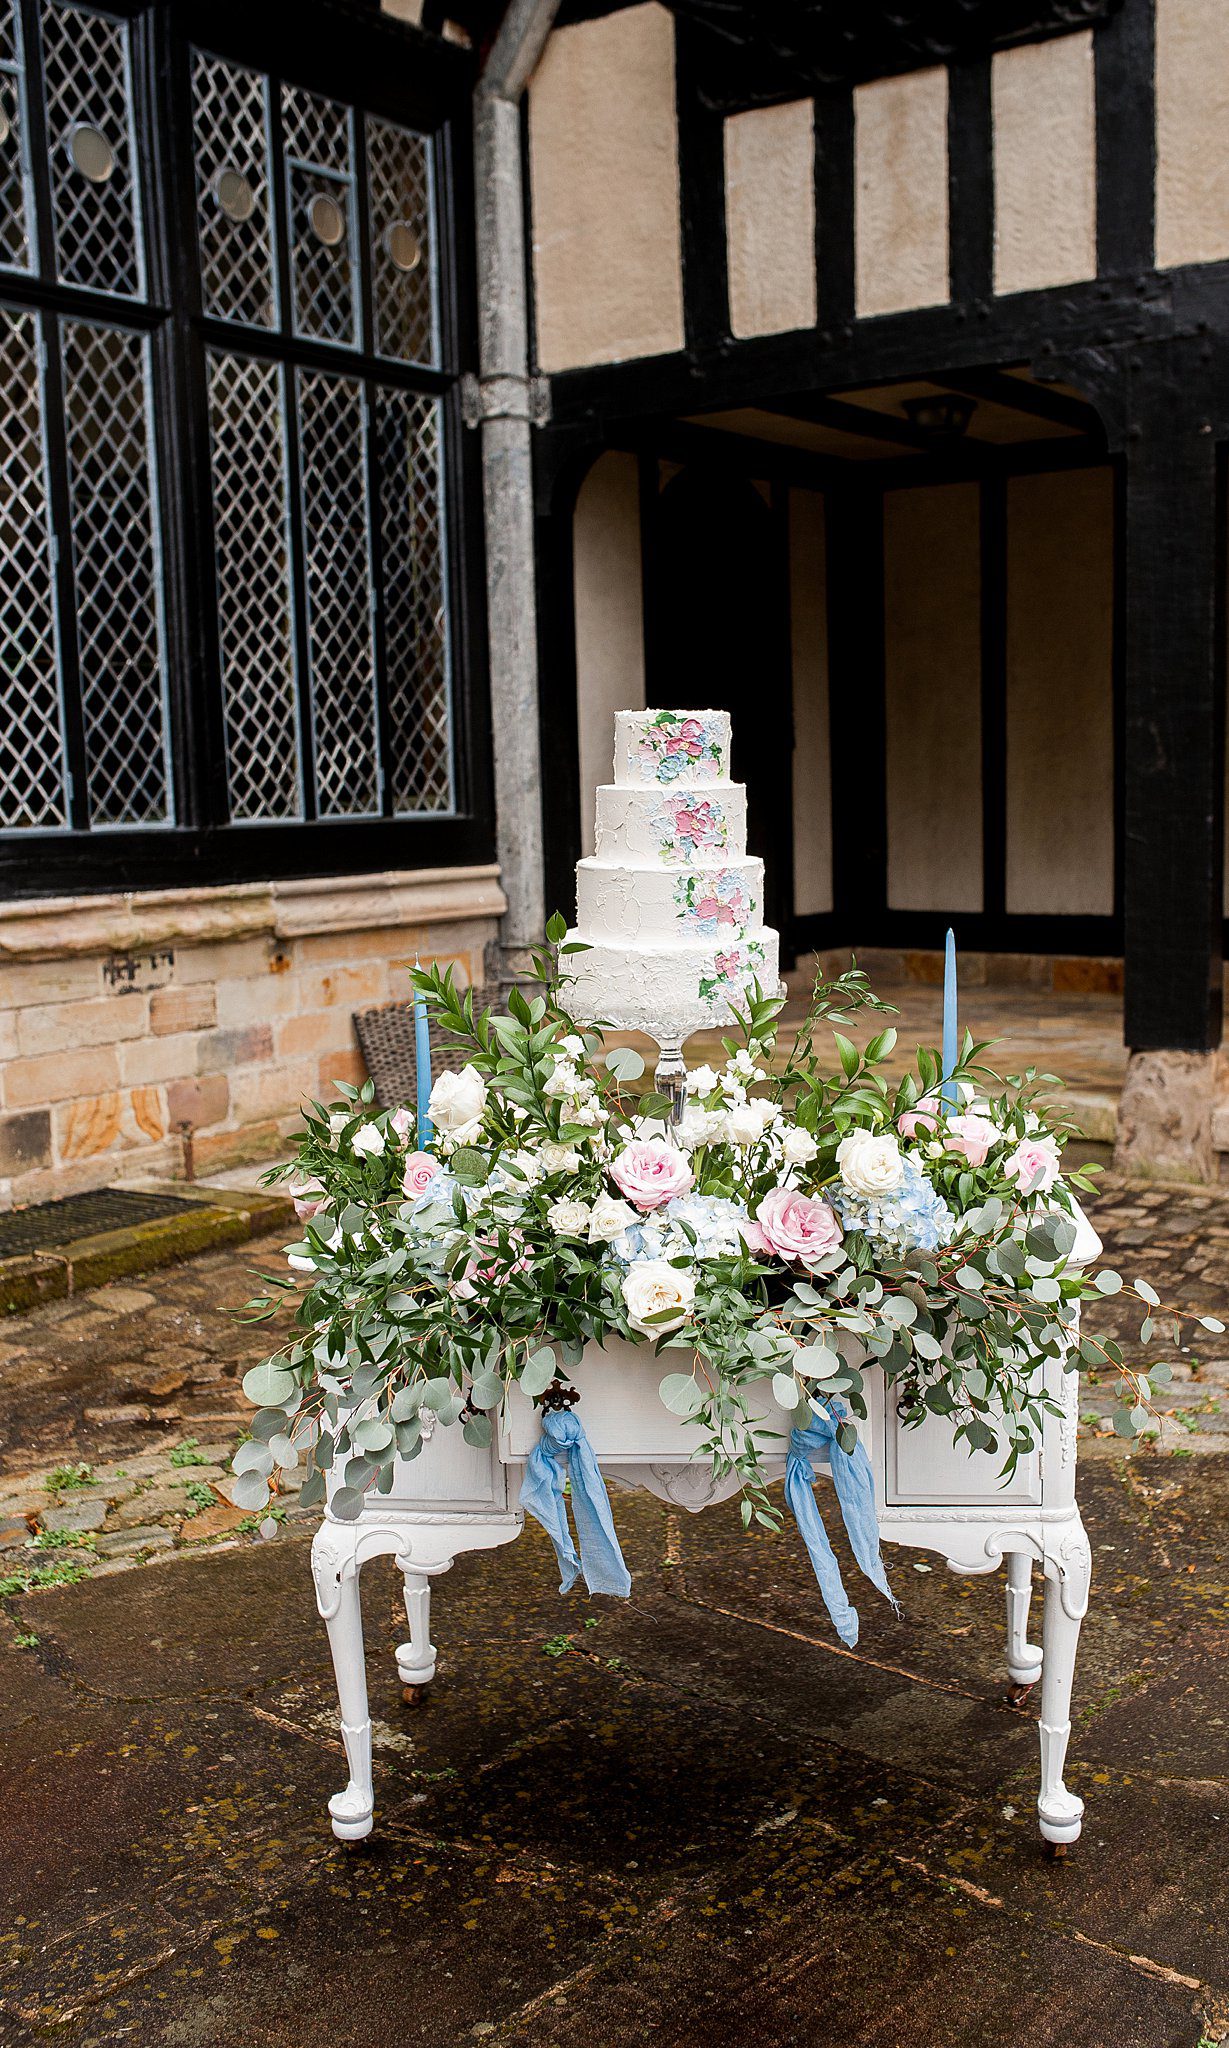 Bridgerton Wedding Cake